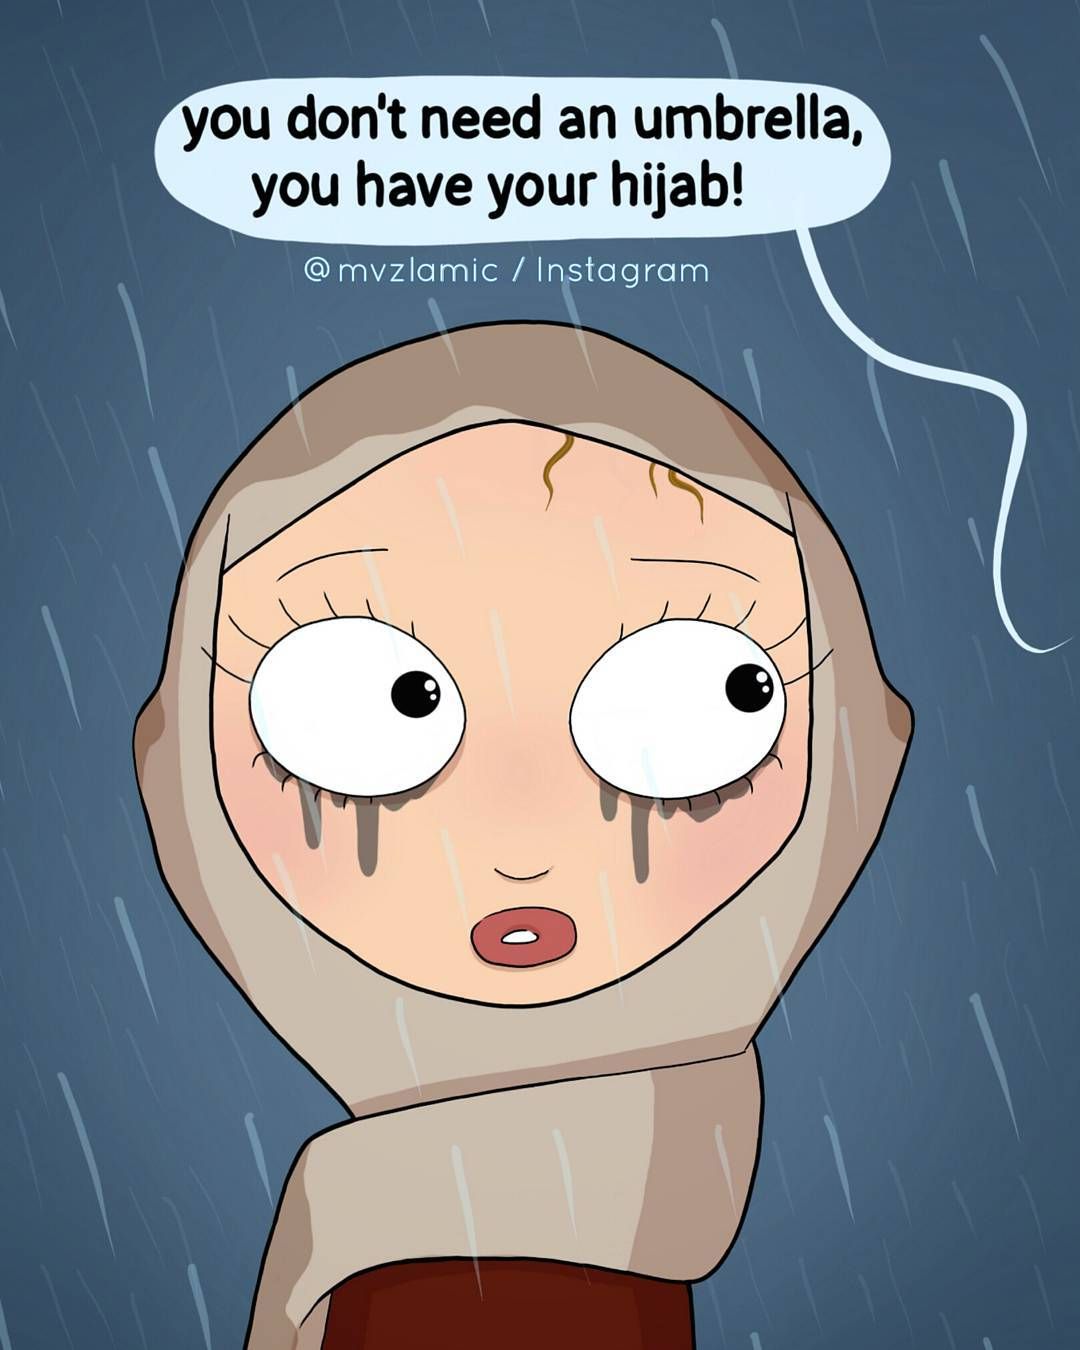 hijab-4-2250d9c51c1f25c4a18e7467e2c858cb.jpg